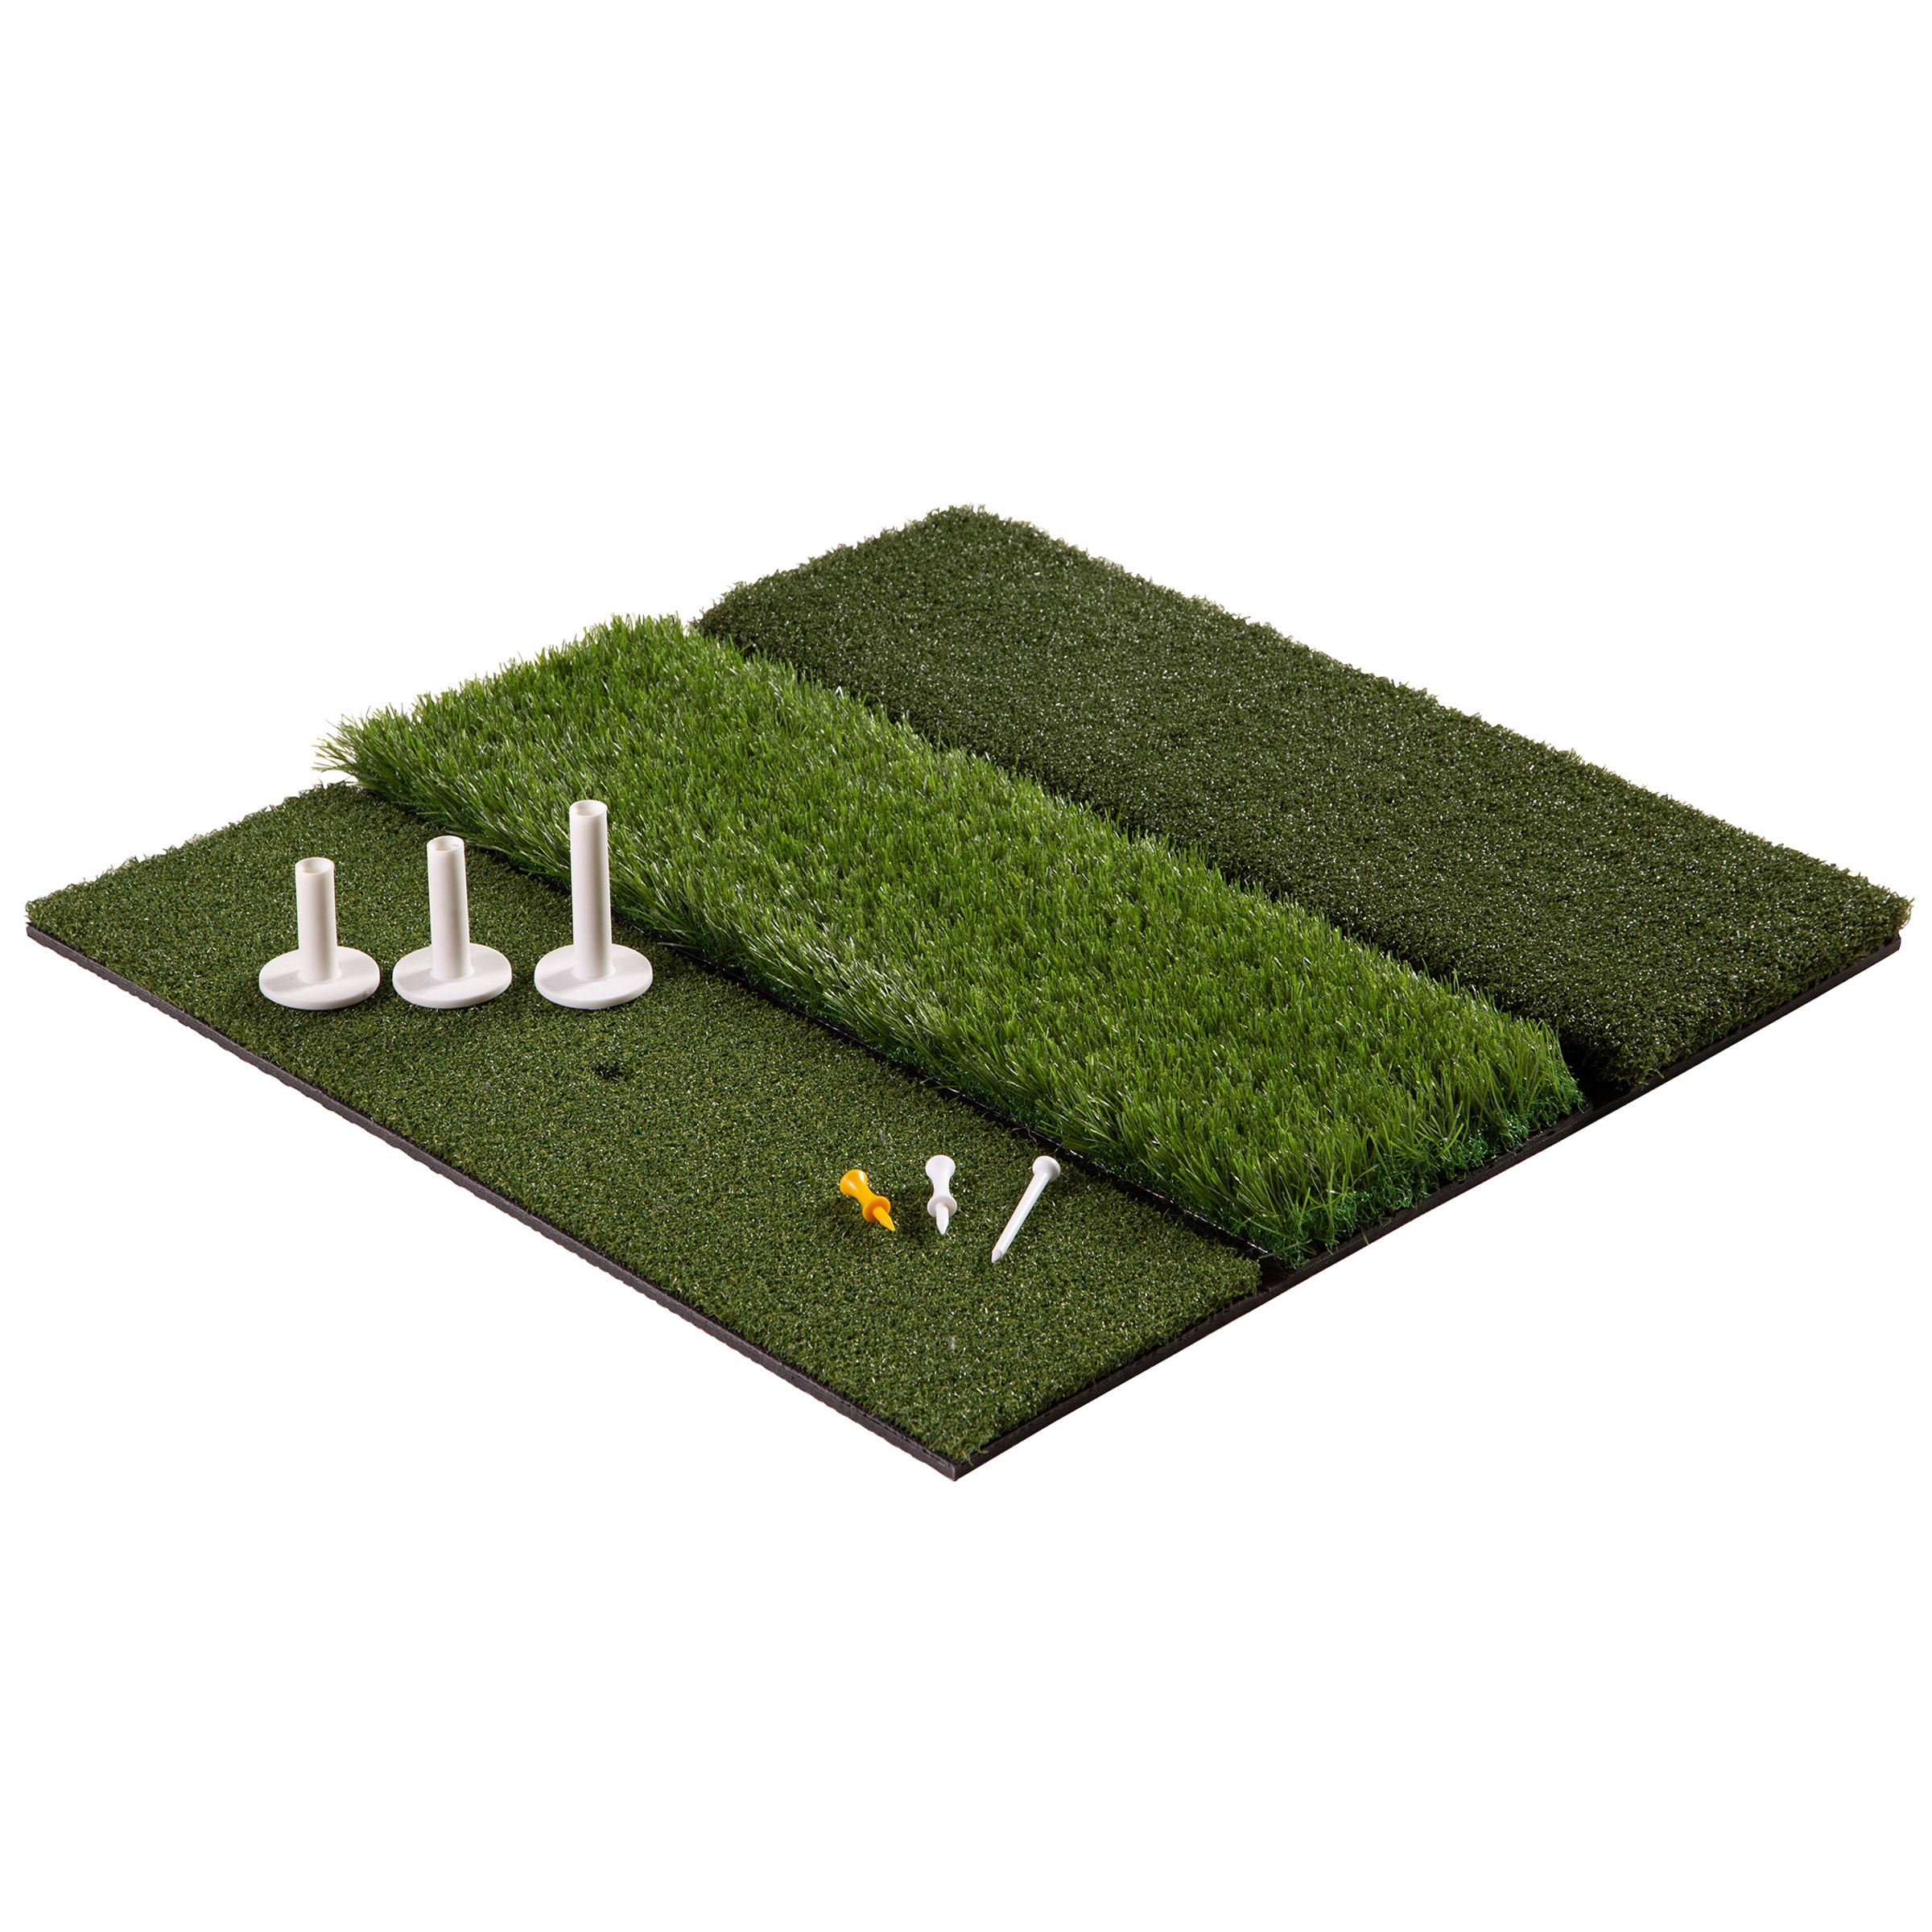 GoSports Golf Simulator - BATTLECHIP: Golf and Cornhole Hybrid